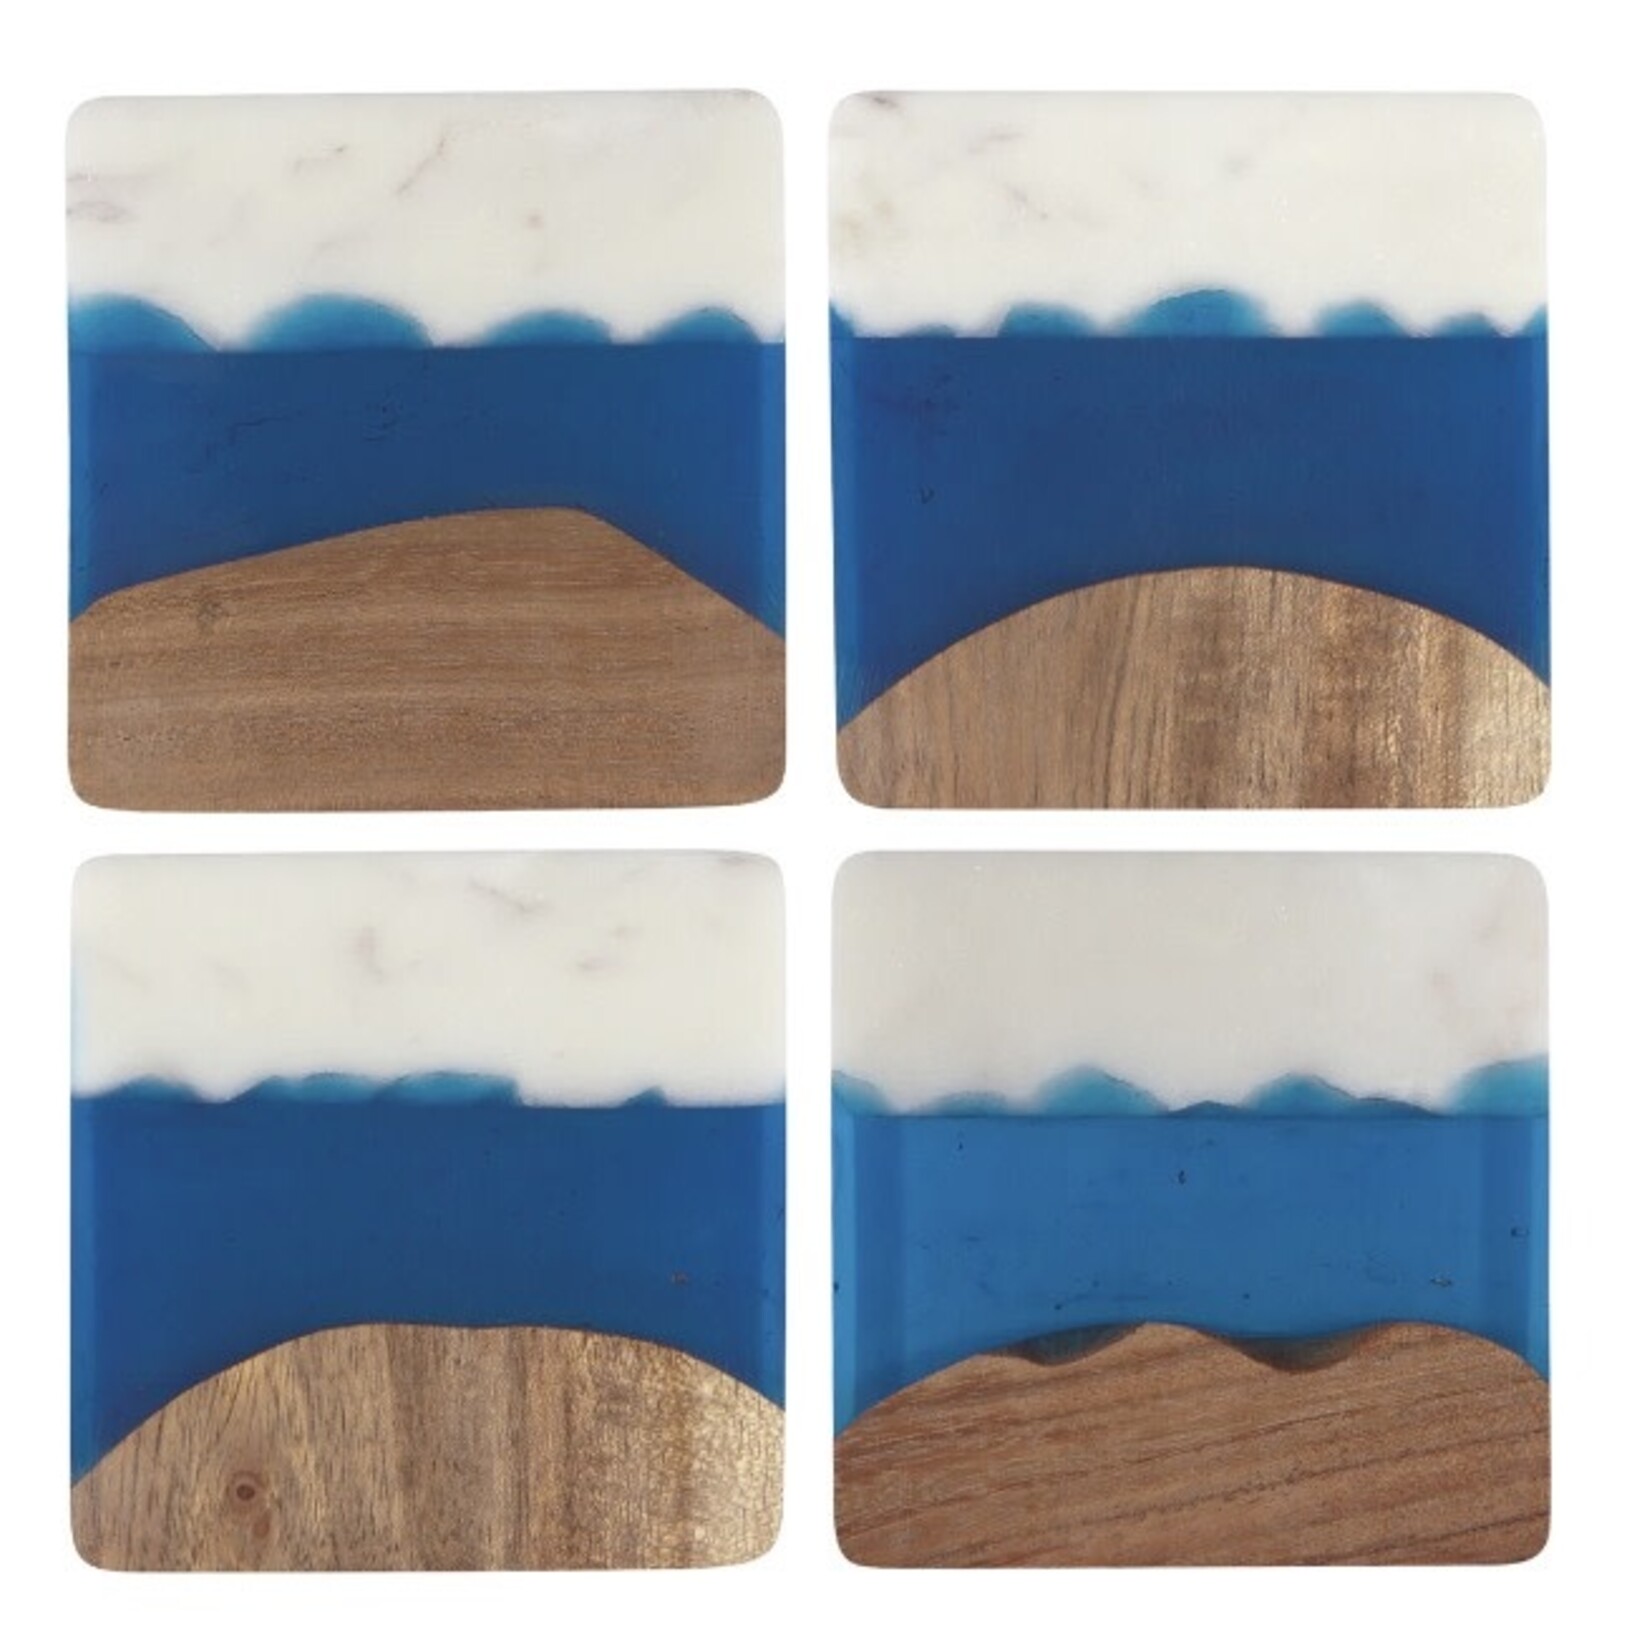 DANICA BLEMISHED DANICA Skyline Azure Marble & Wood Coasters S/4 REG 41.99